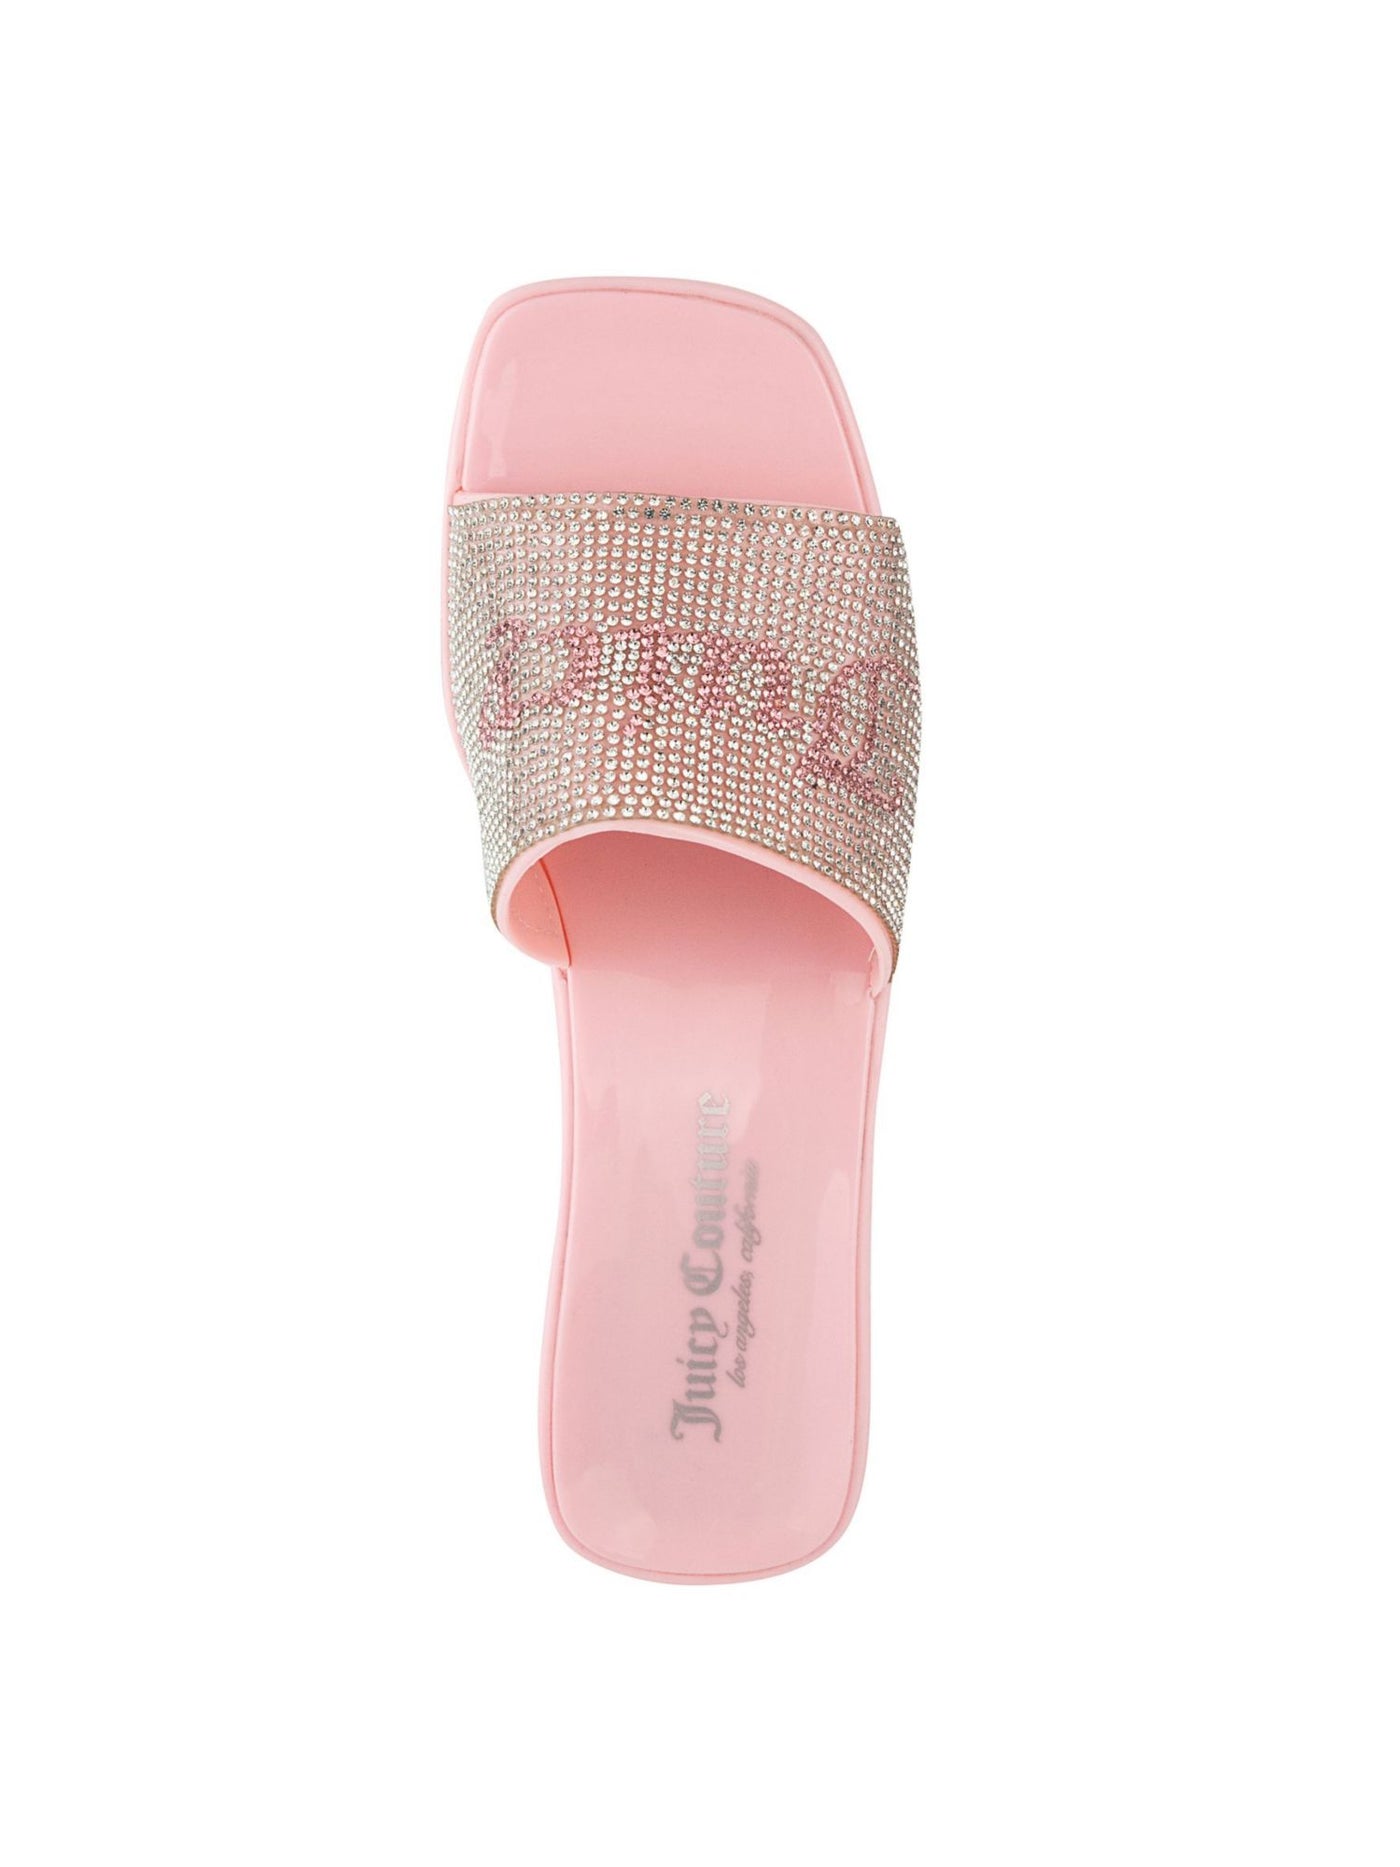 JUICY COUTURE Womens Pink Embellished Harmona Square Toe Block Heel Slip On Dress Heeled Sandal 8 M